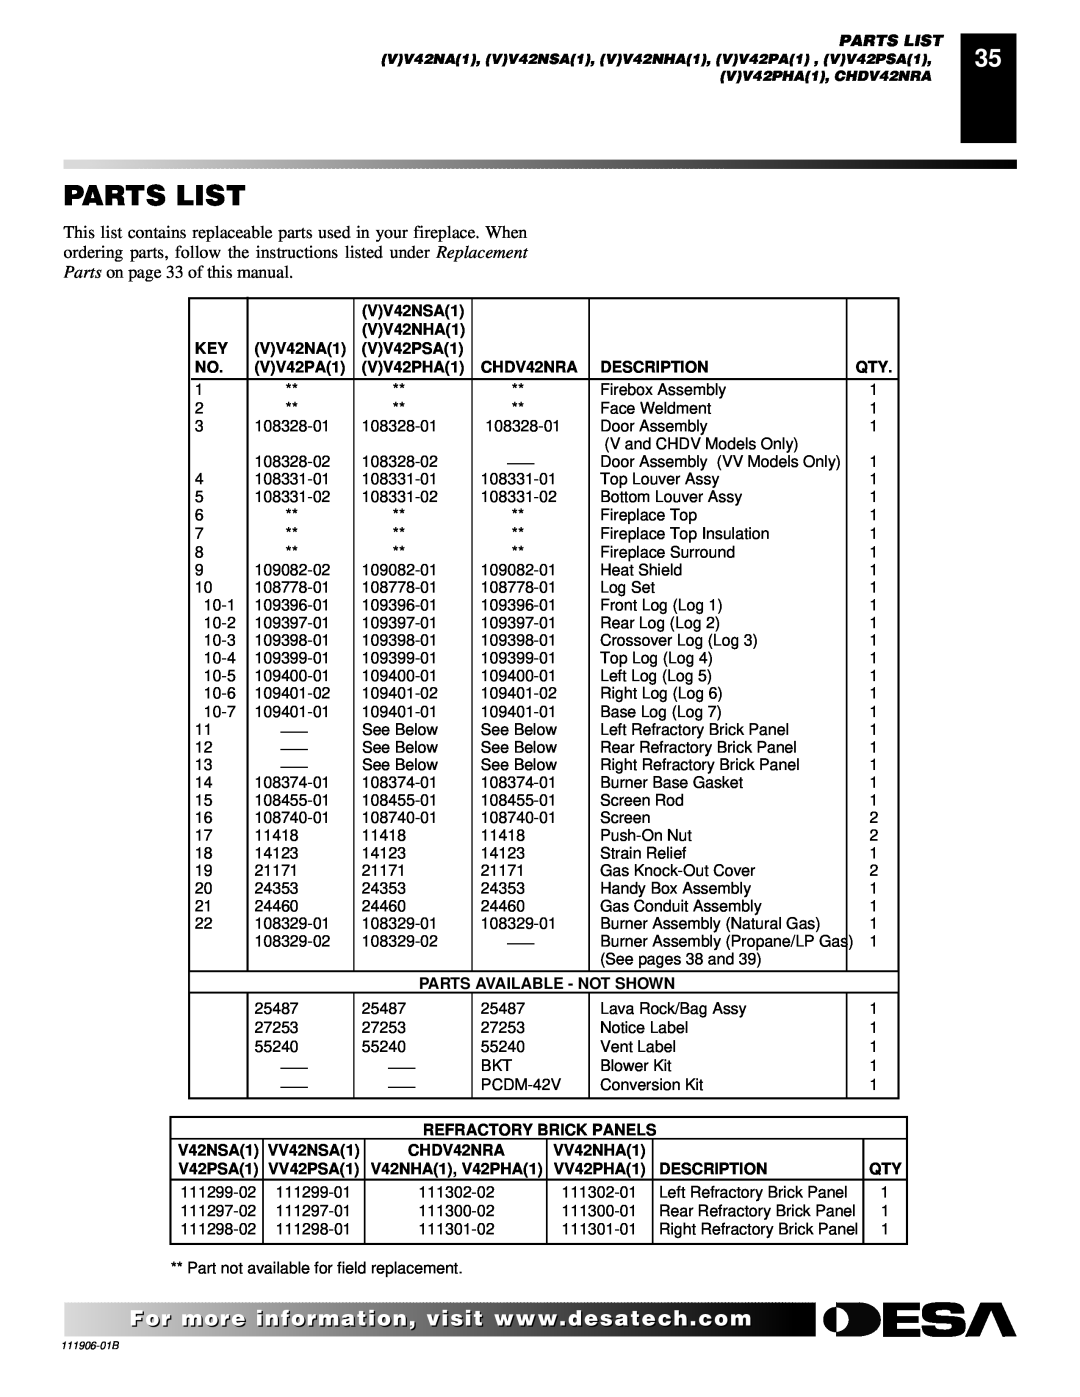 Desa CHDV42NRA Parts List, VV42NSA1, VV42NHA1, VV42NA1, VV42PSA1, VV42PA1, VV42PHA1, Description, Refractory Brick Panels 